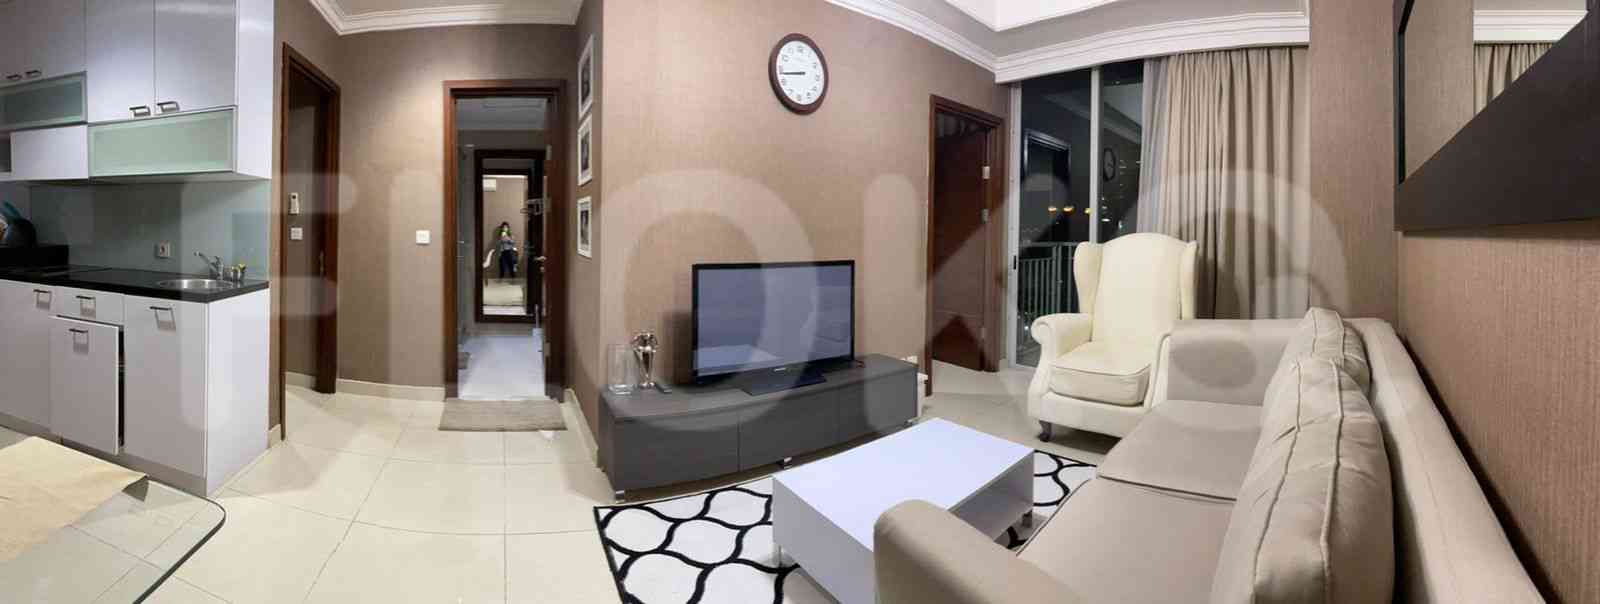 2 Bedroom on 20th Floor for Rent in Kuningan City (Denpasar Residence)  - fkuc39 2